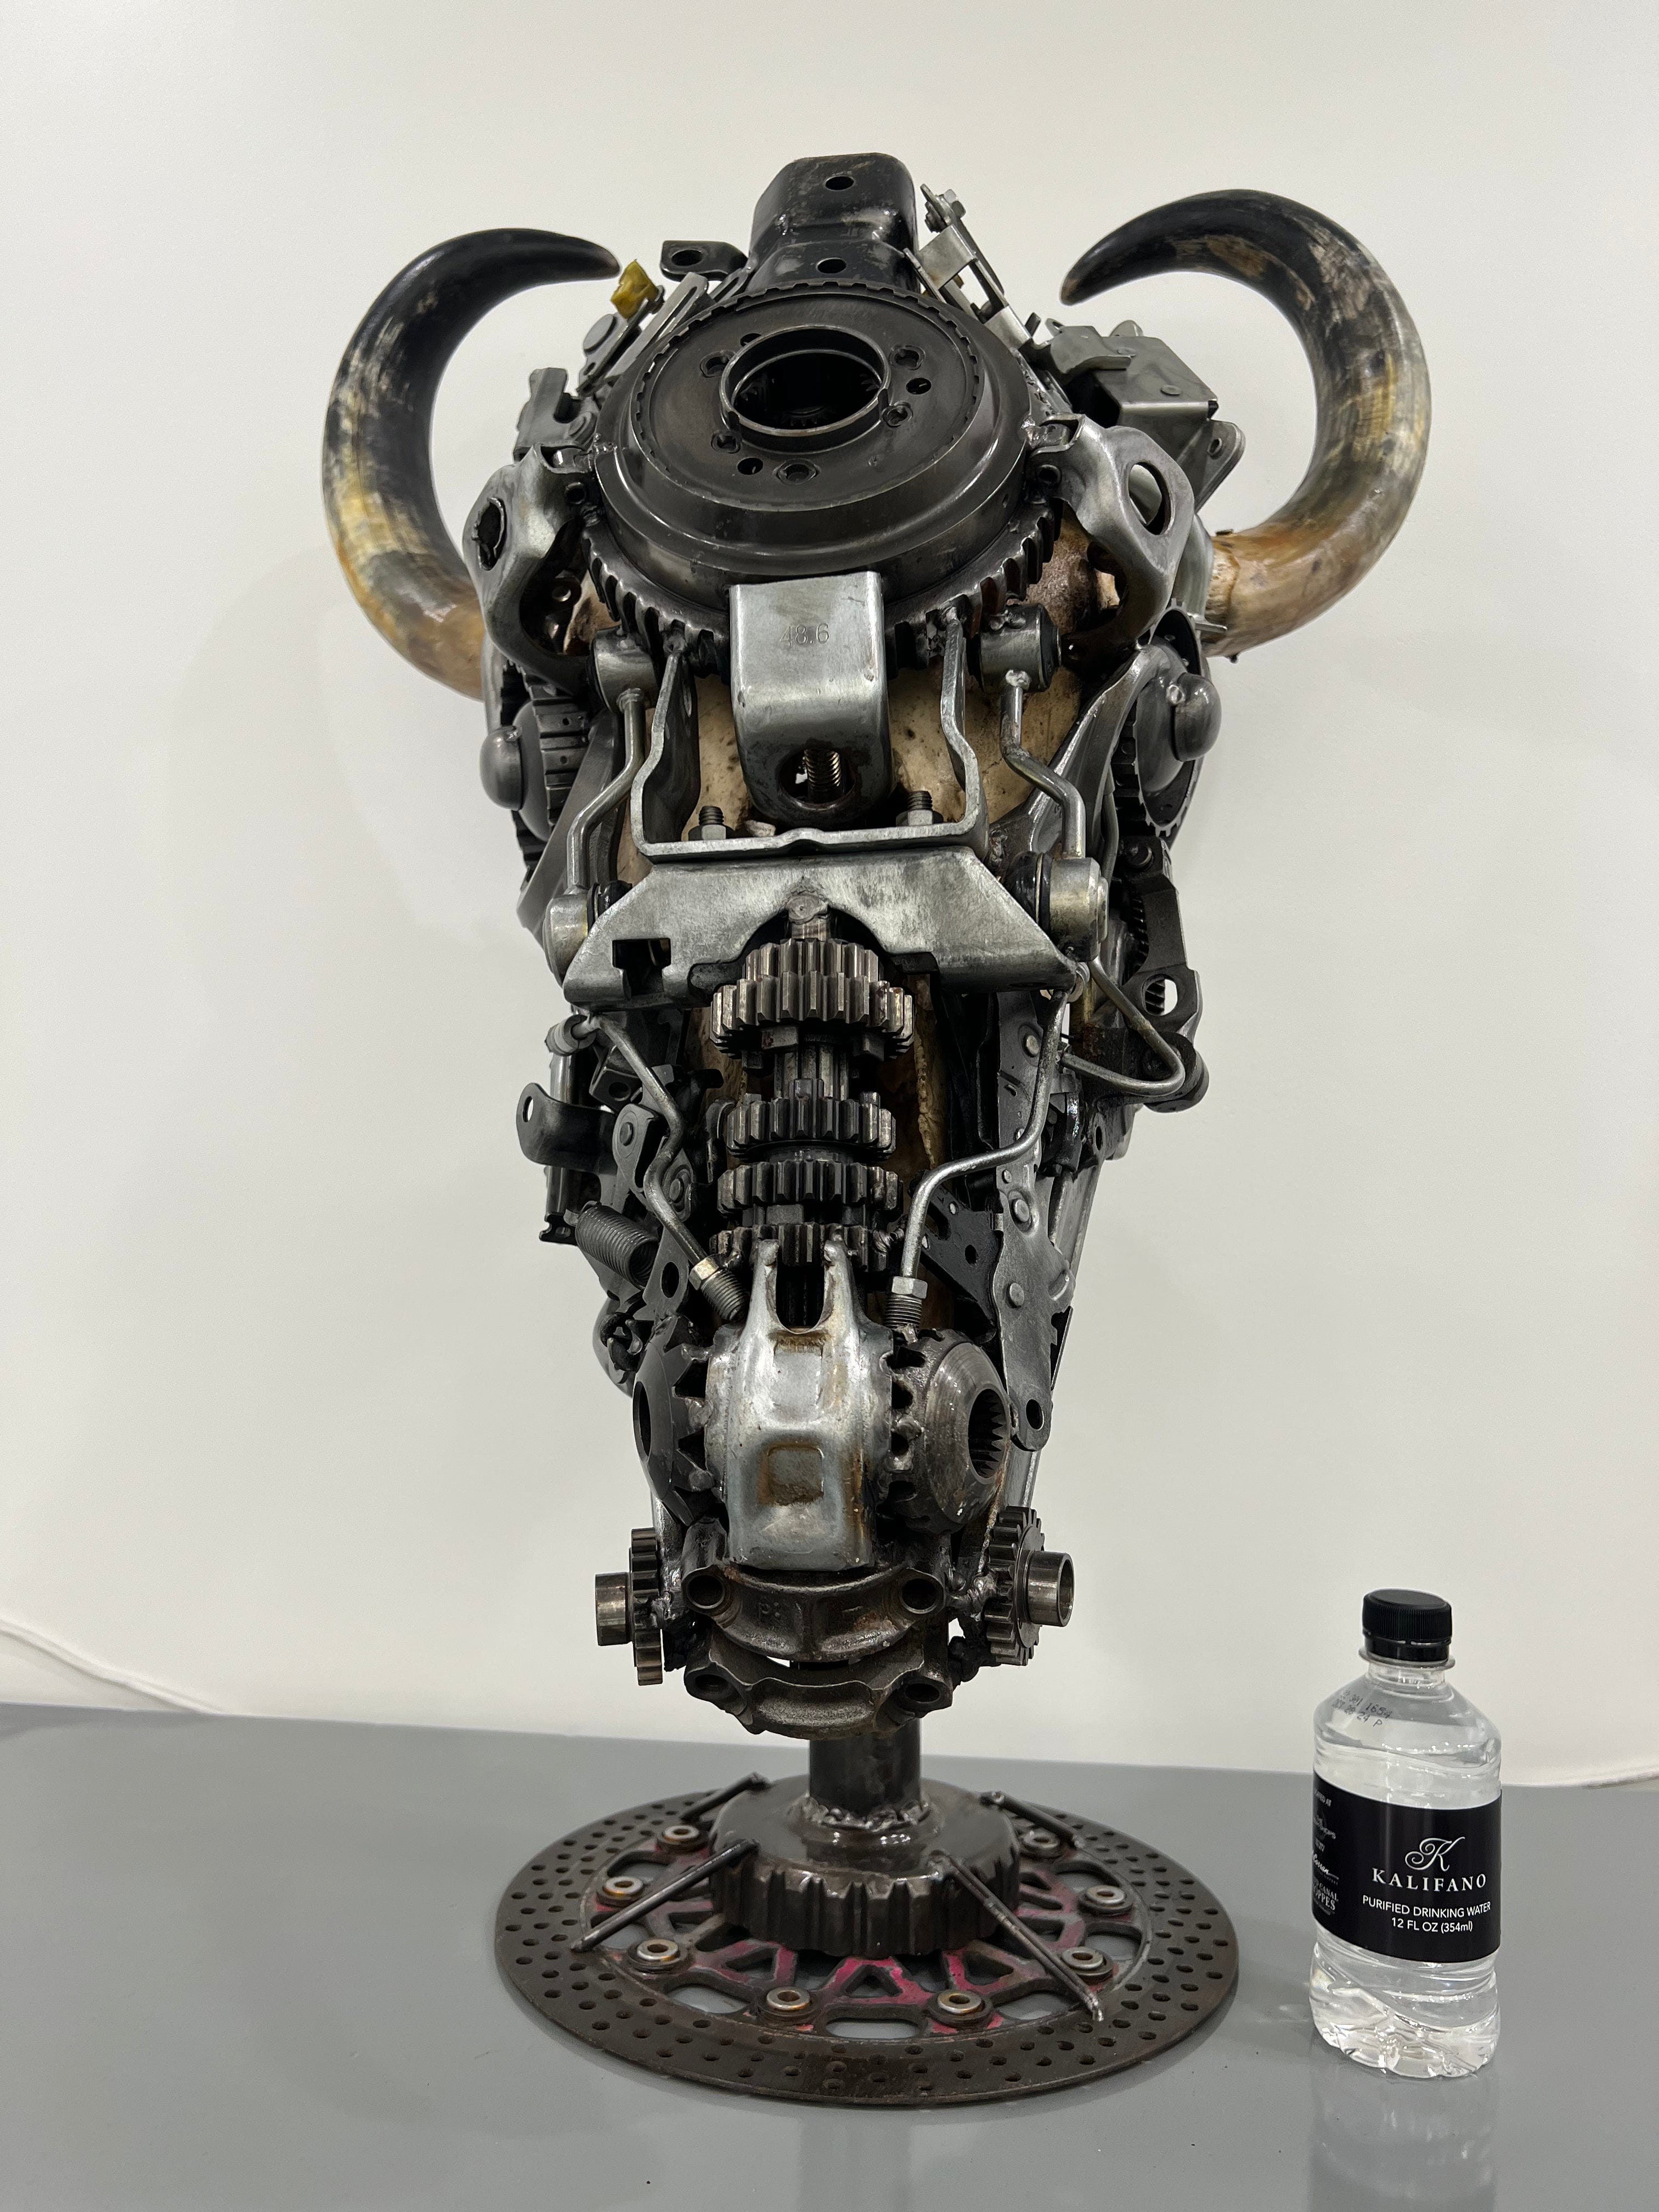 Kalifano Recycled Metal Art Bull Skull Recycled Metal Art Sculpture RMS-BSK-S68